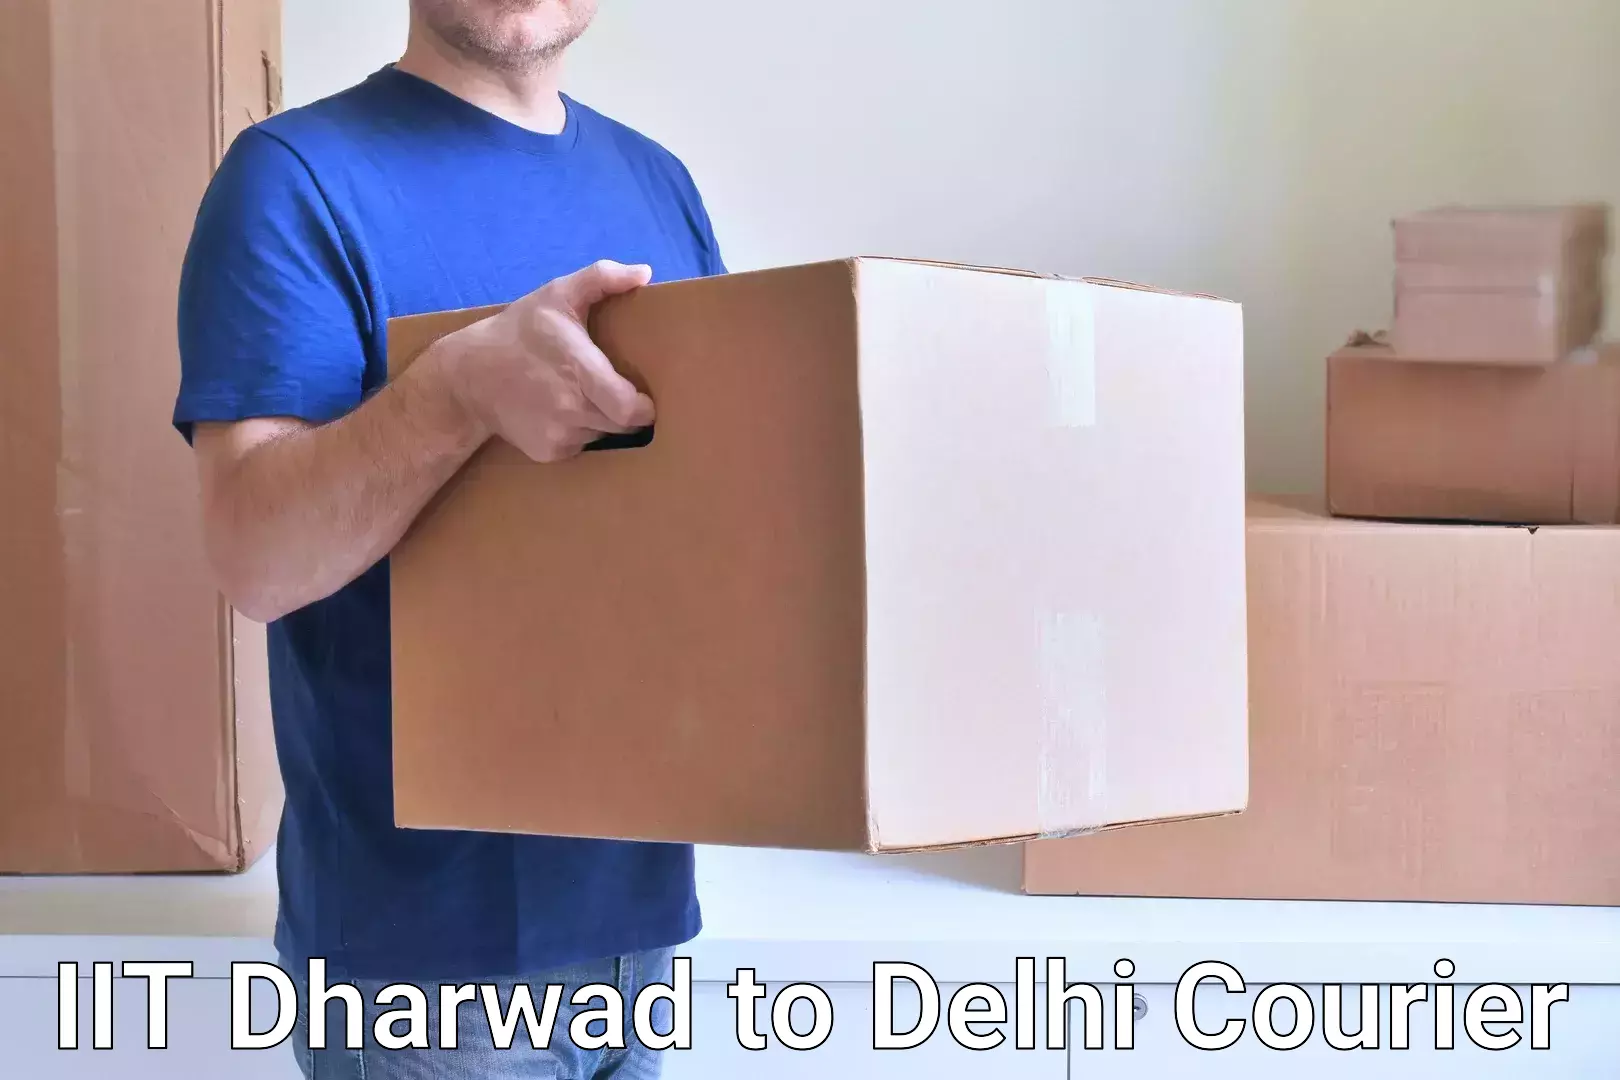 Courier service comparison IIT Dharwad to Kalkaji